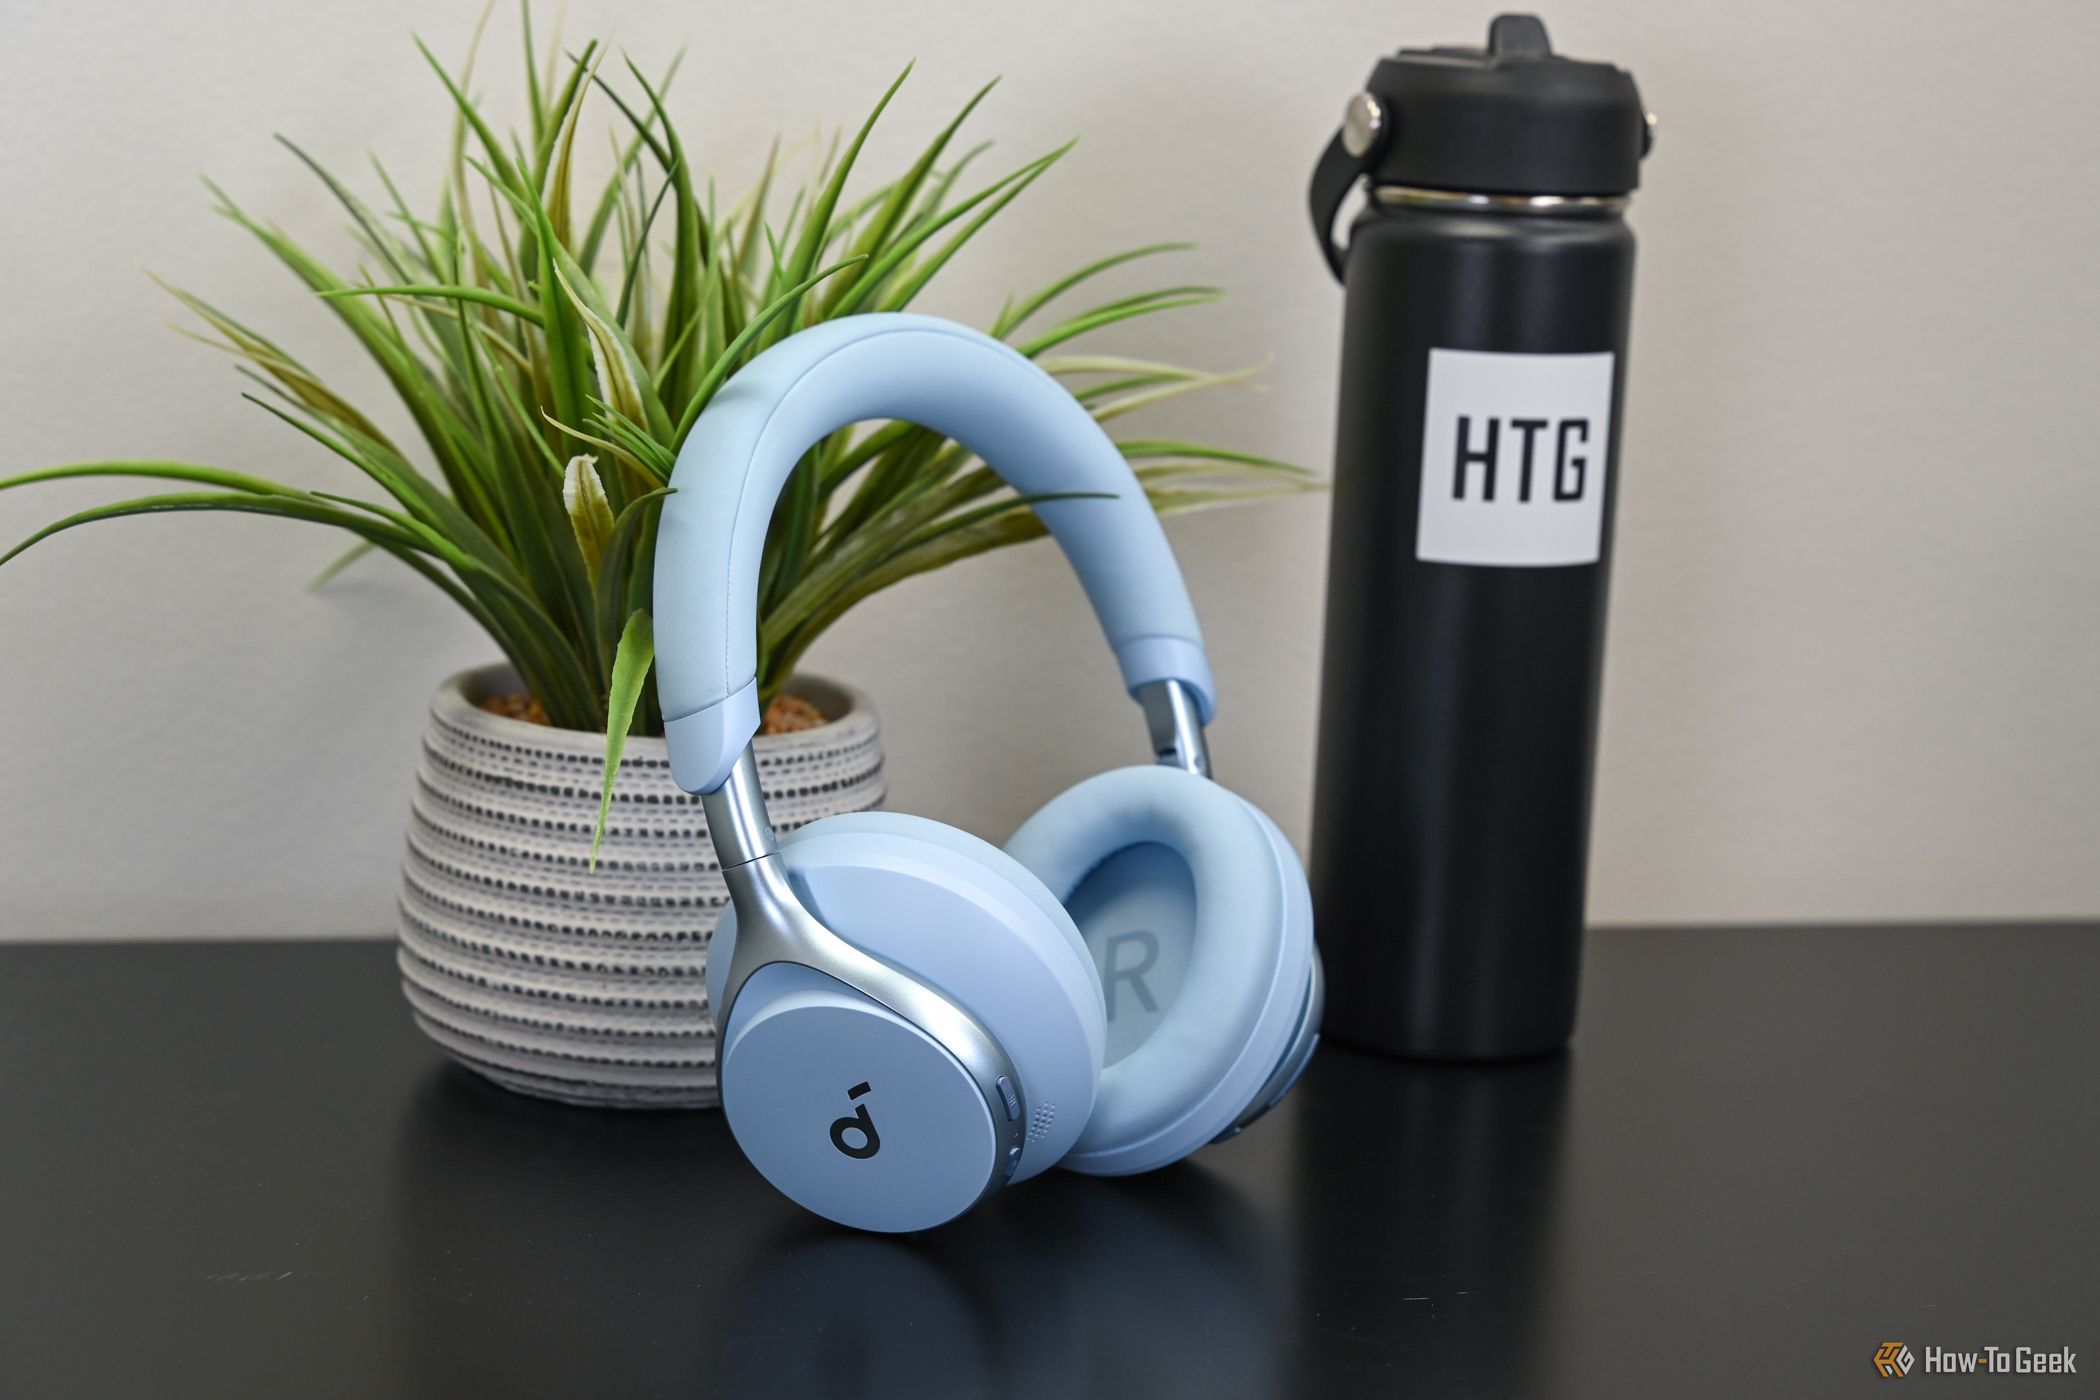 Soundcore headphones leaning against a plant